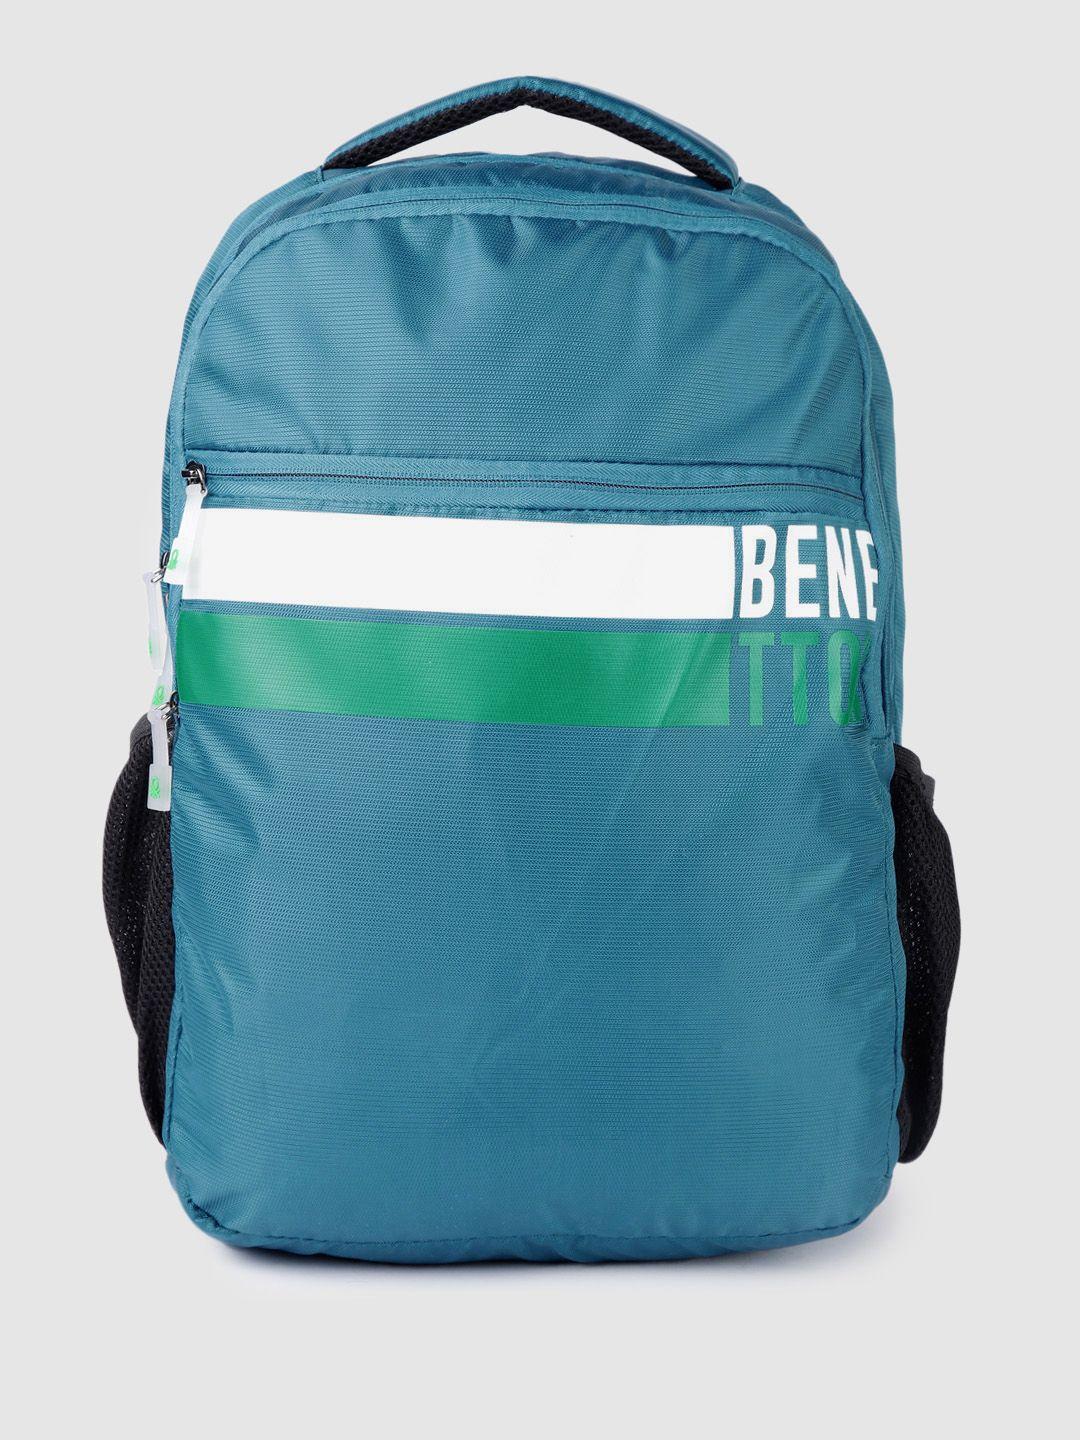 united colors of benetton unisex brand logo backpack